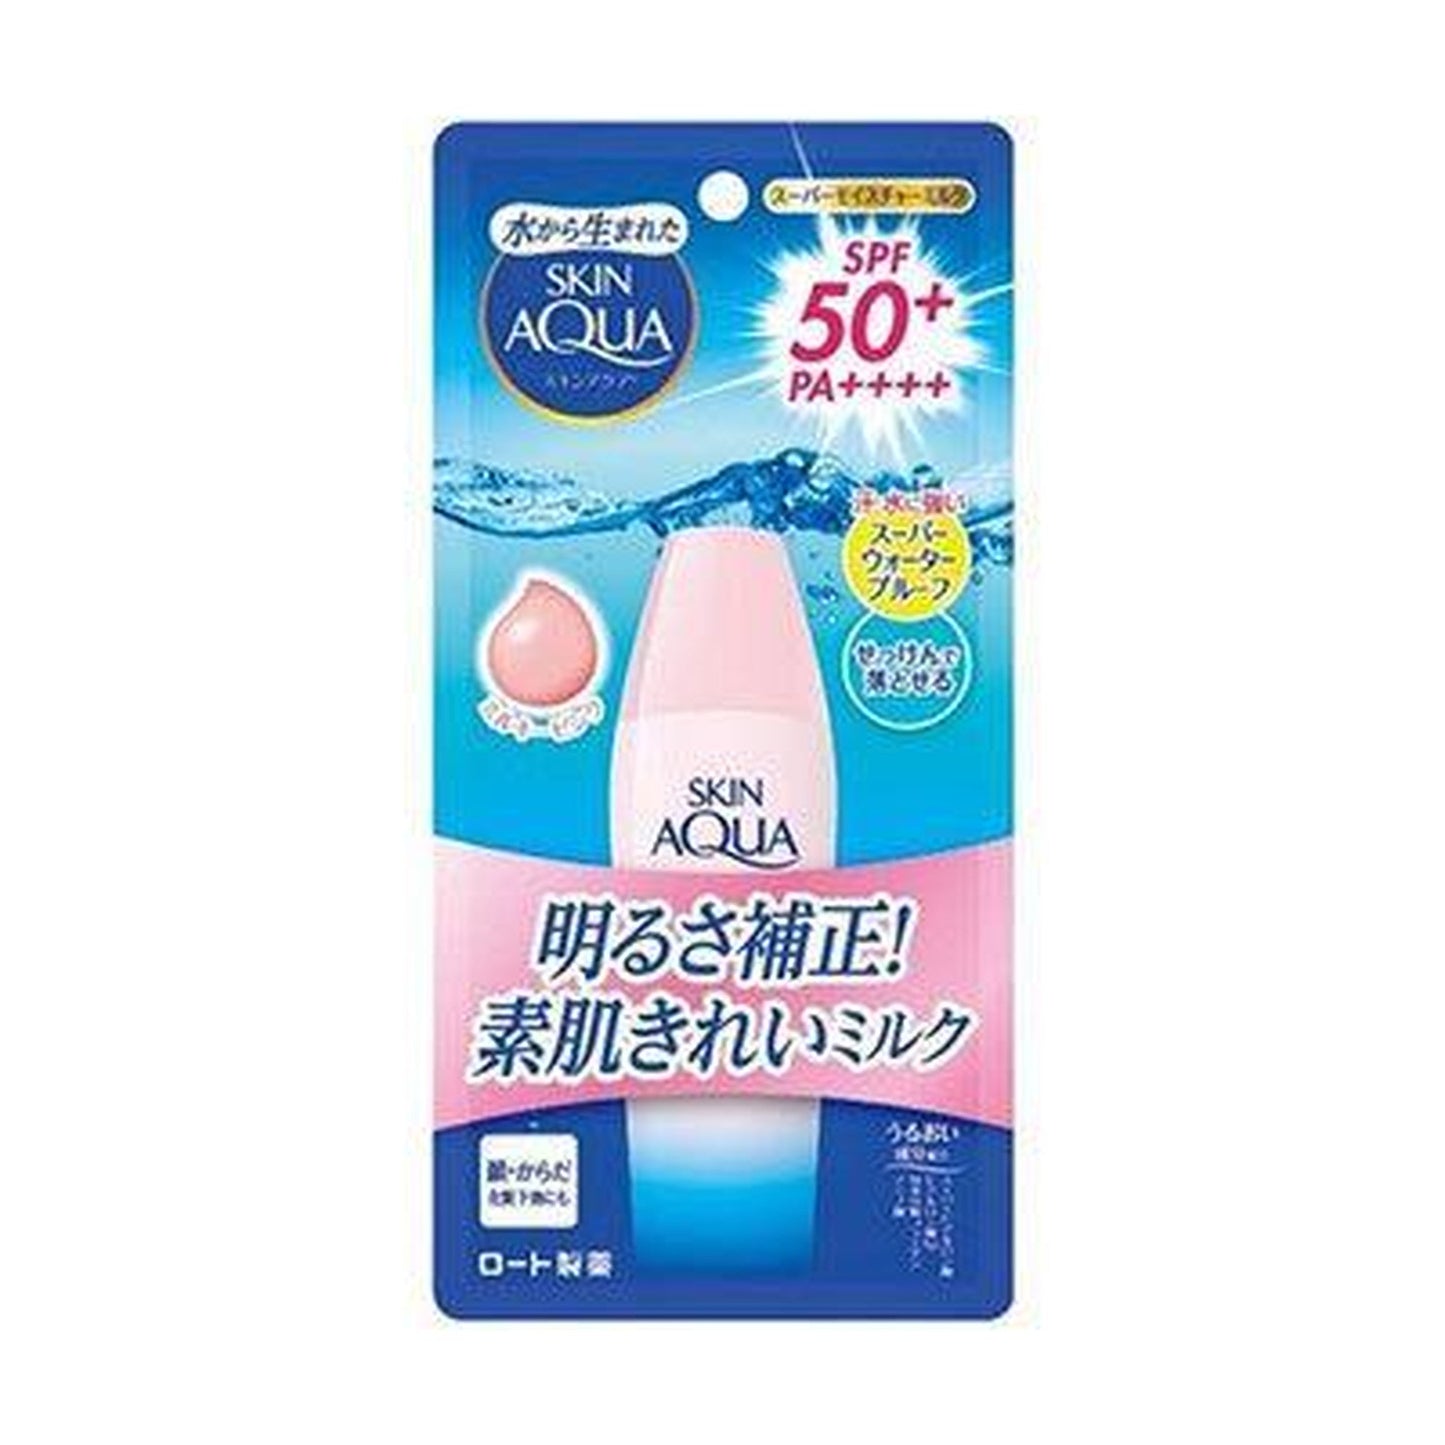 Skin Aqua Super Moisture Milk Milky Pink 40ml Rohto Pharmaceutical